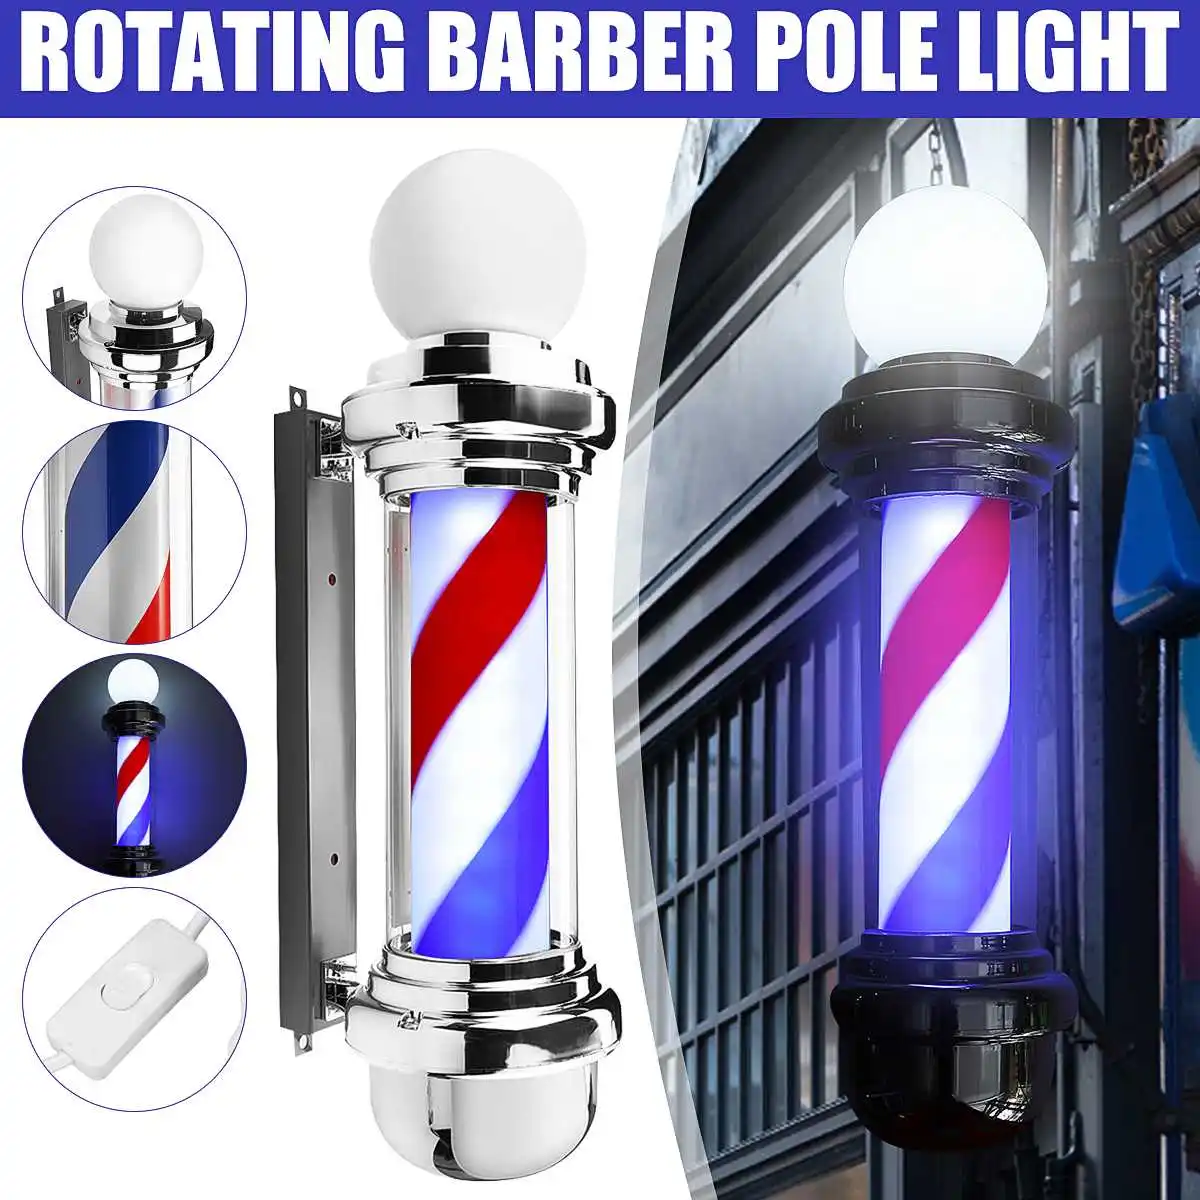 Barber Pole Red+White Stripes Classic Vintage Salon Barbers Shop Sign LED Light 